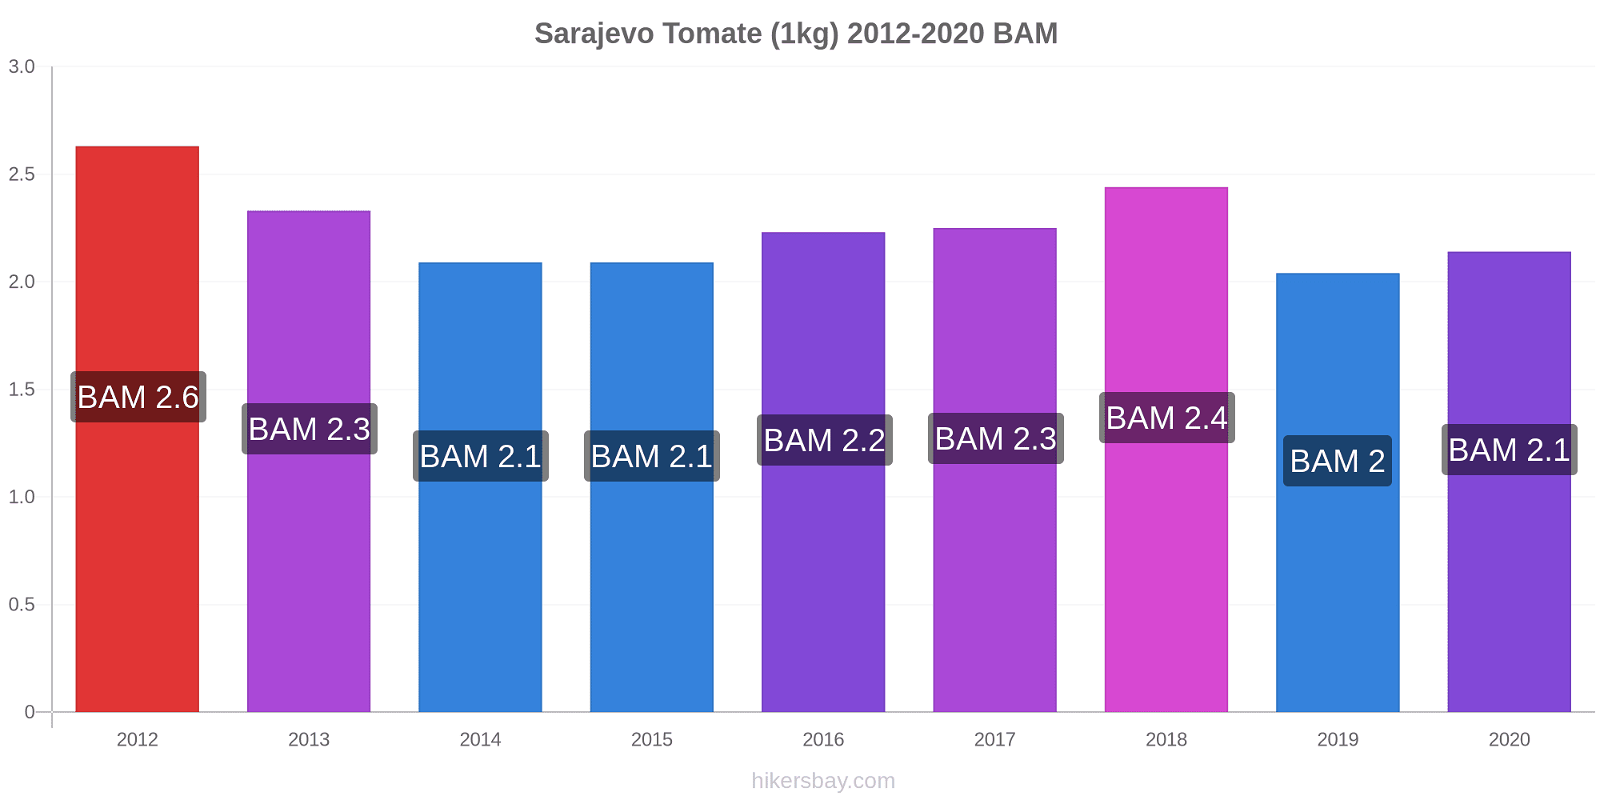 Sarajevo changements de prix Tomate (1kg) hikersbay.com